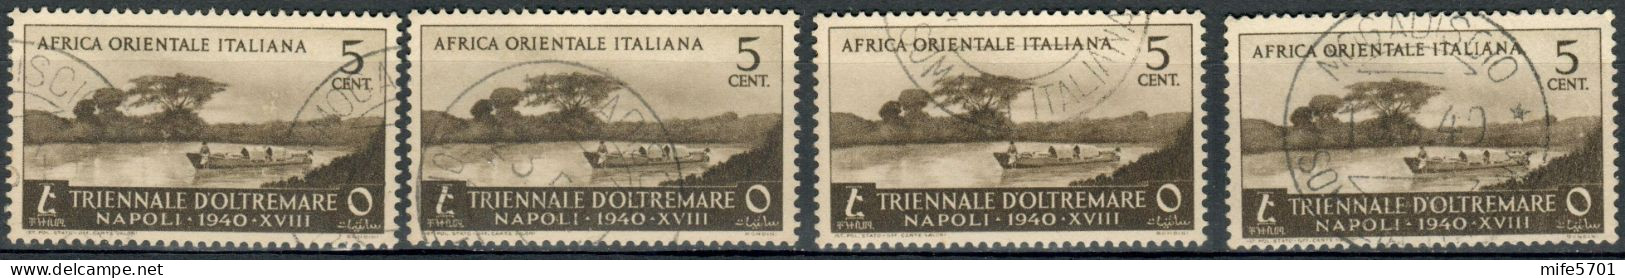 REGNO AFRICA ORIENTALE ITALIANA 1940 A.O.I. 1ª MOSTRA TRIENNALE D'OLTREMARE 4 ESEMPLARI DA C. 5 USATI - SASSONE 27 - Italian Eastern Africa